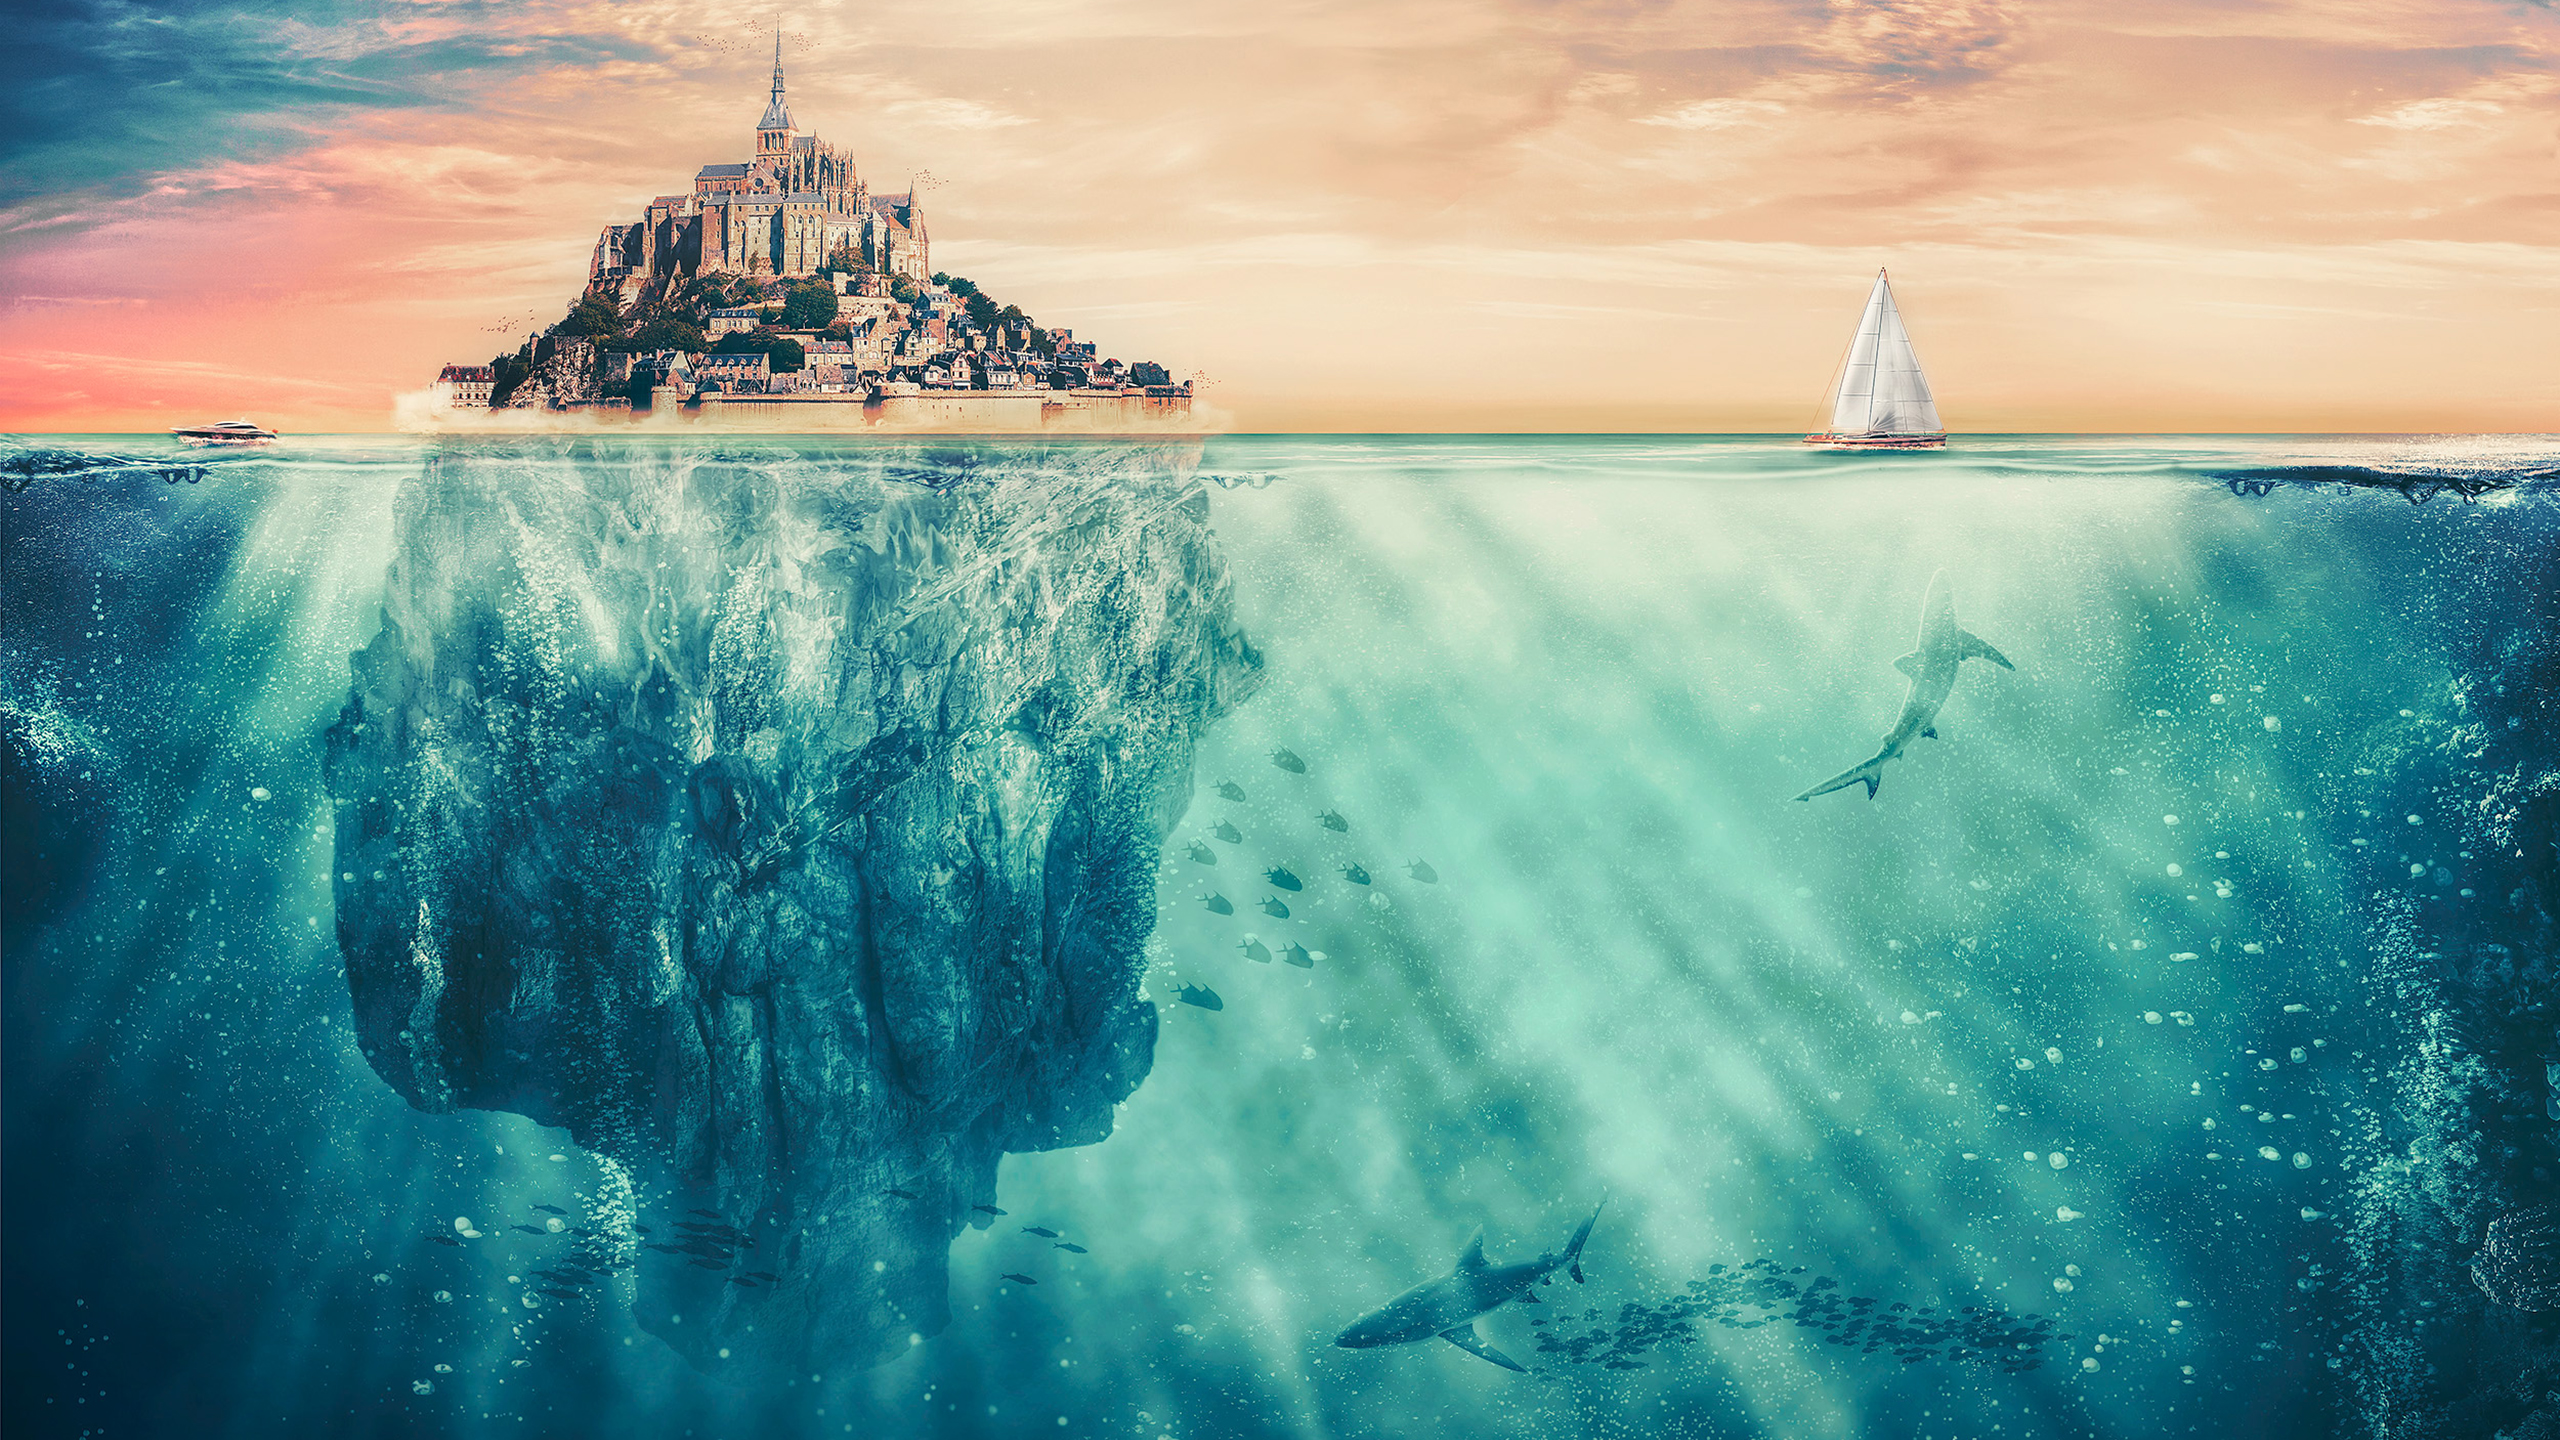 Surreal Fantasy Island by Mehdi Mostefaï